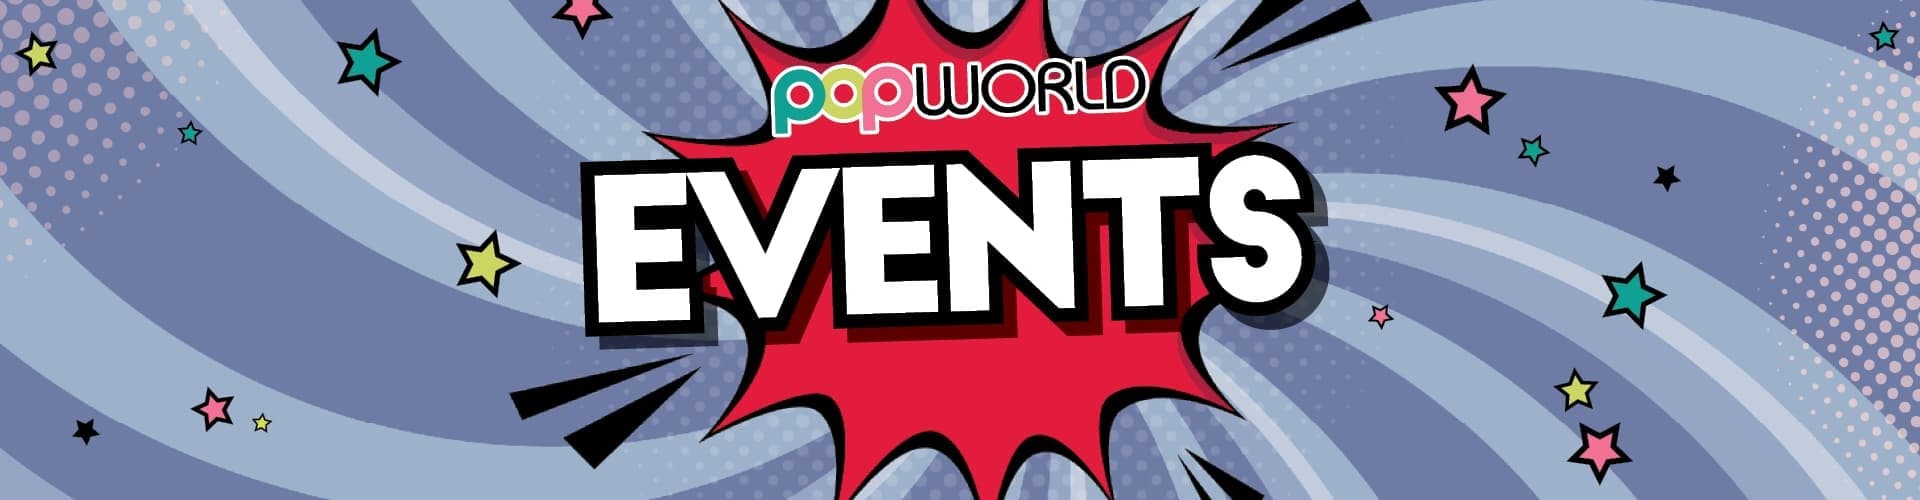 Events at Popworld London Watling Street